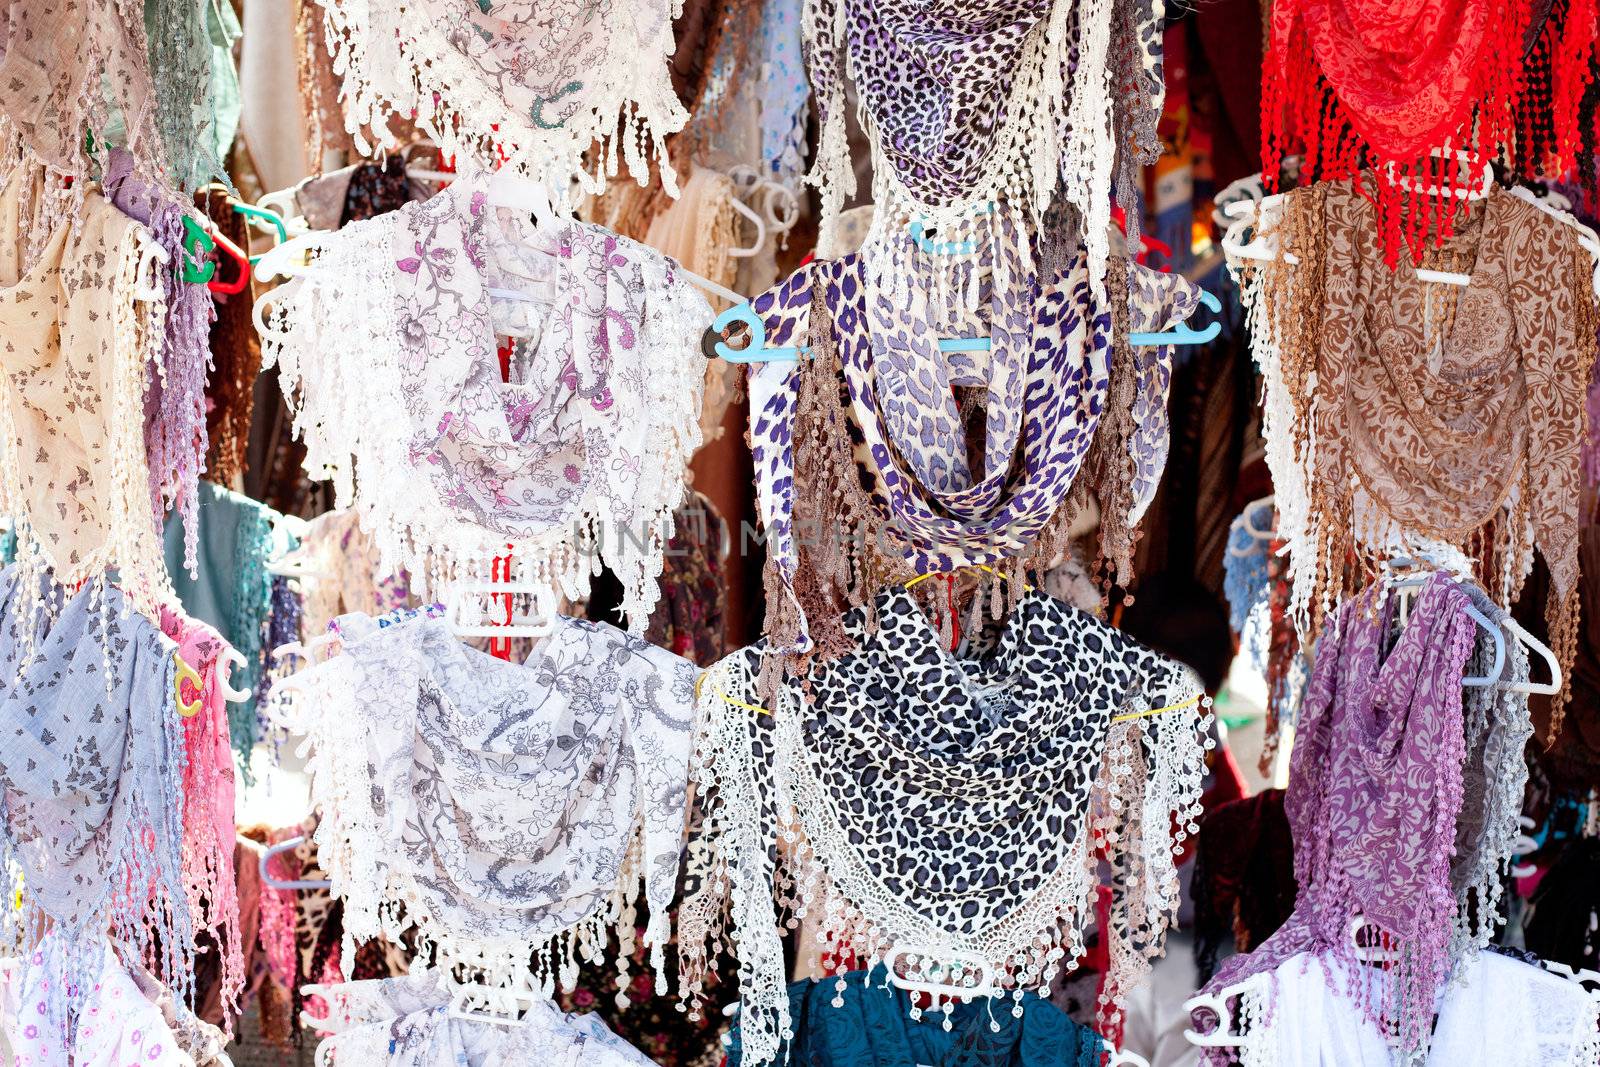 colorful fashion handkerchiefs on hangers display